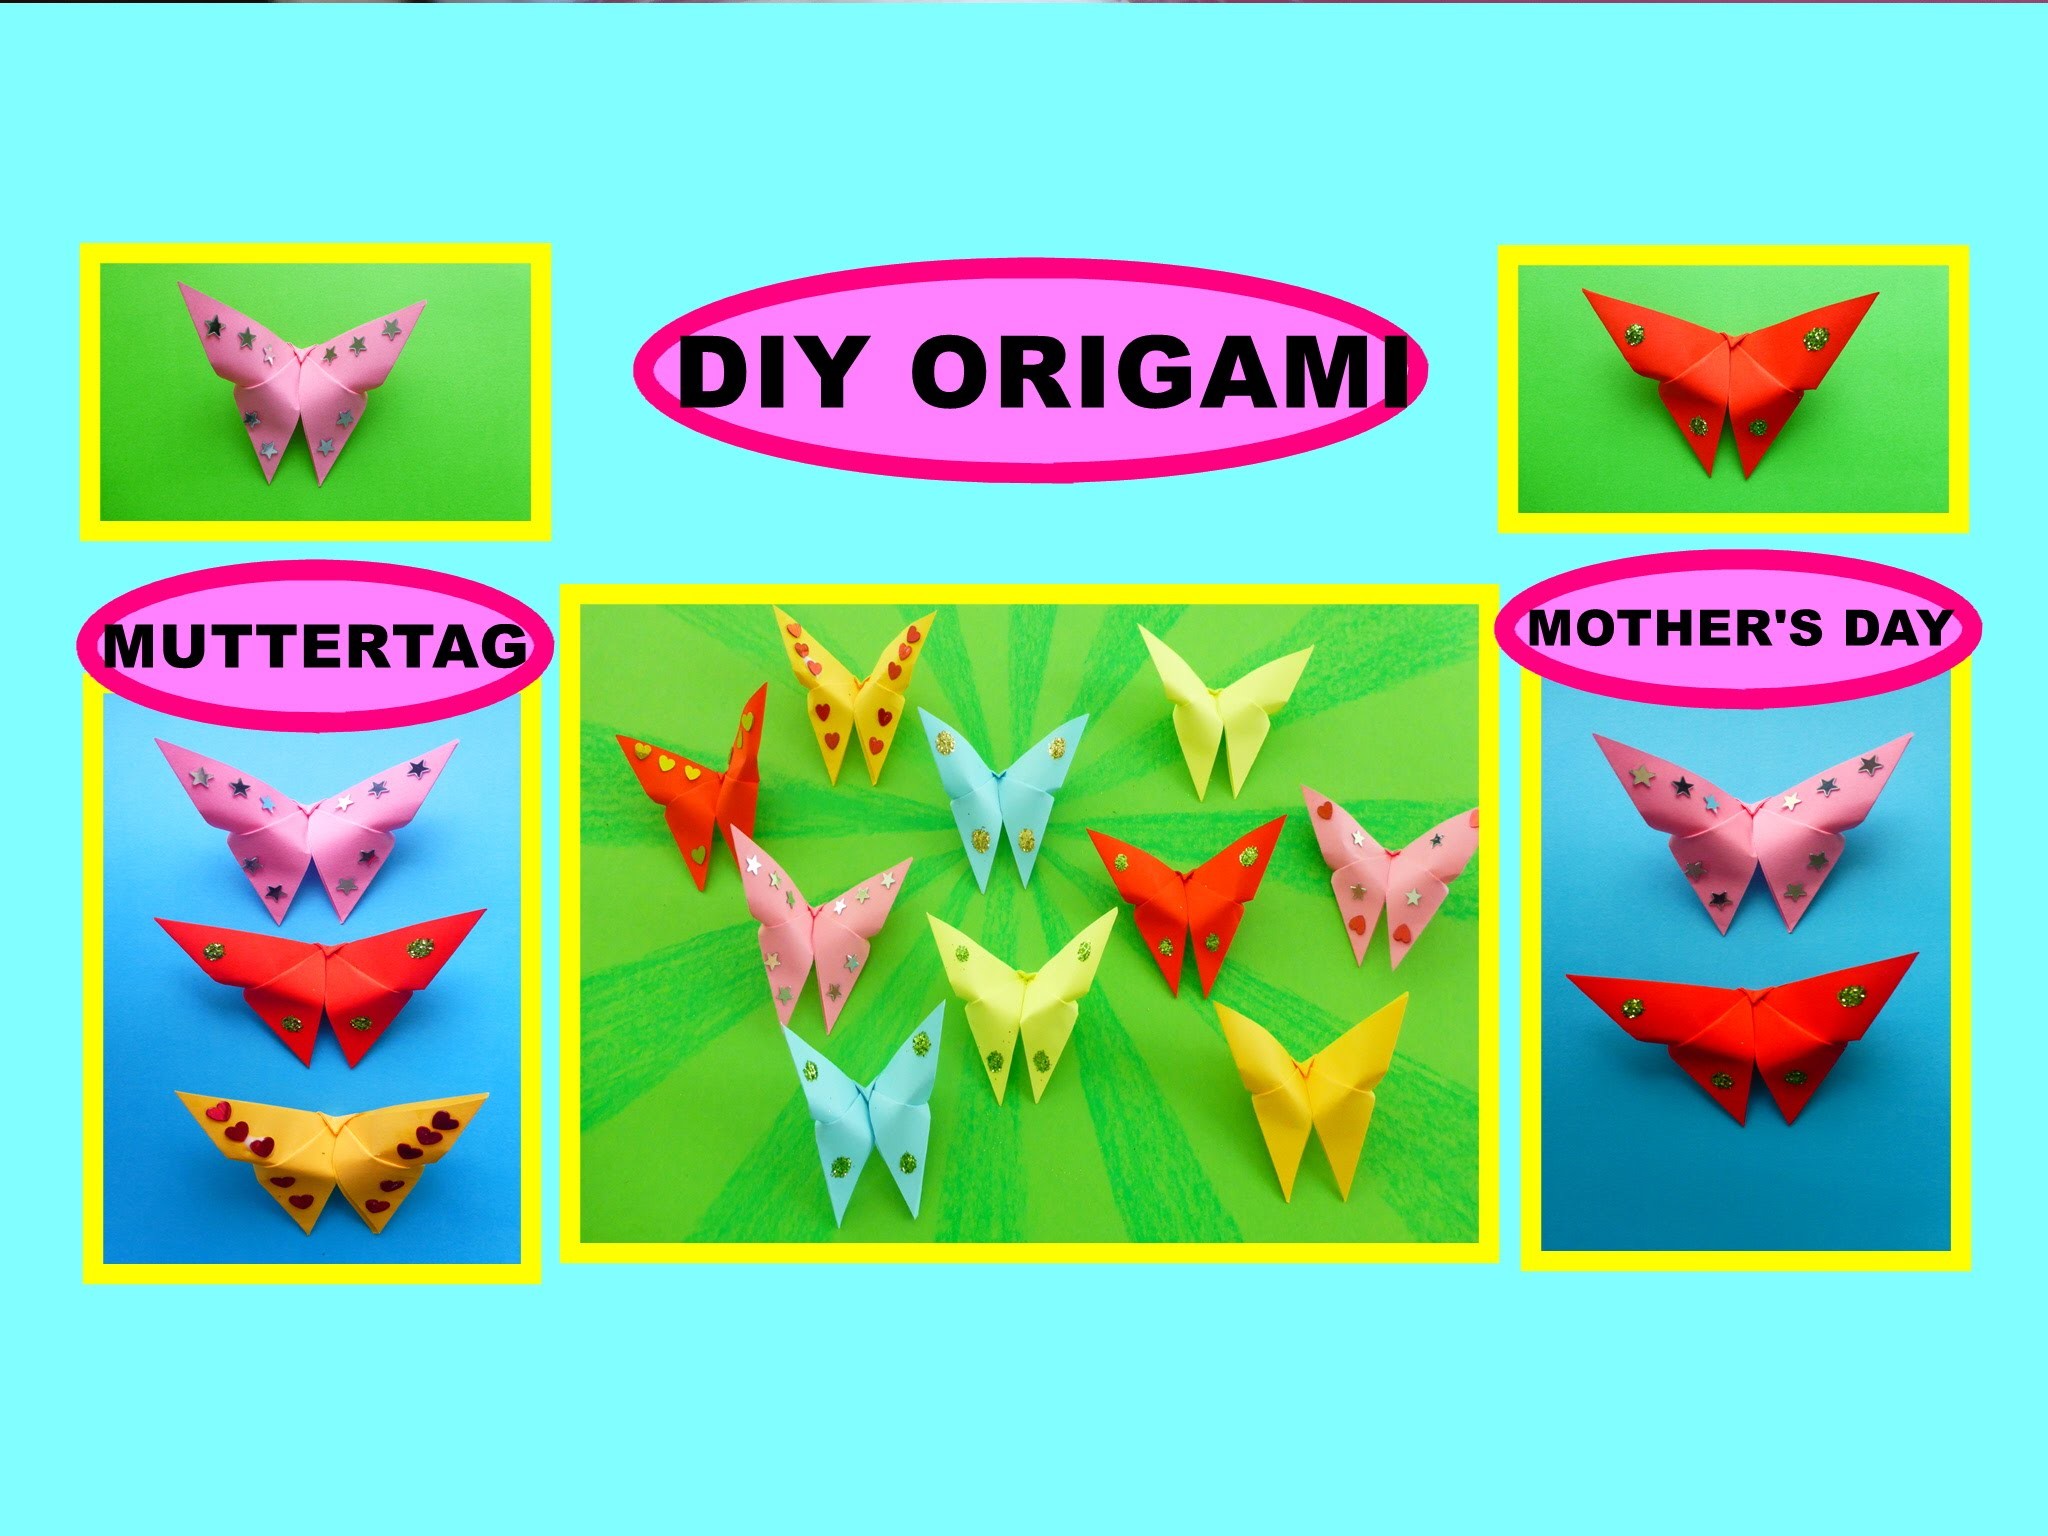 DIY Origami Paper Butterfly, Gift Ideas for Mothers day. Schmetterling als Geschenk zum Muttertag